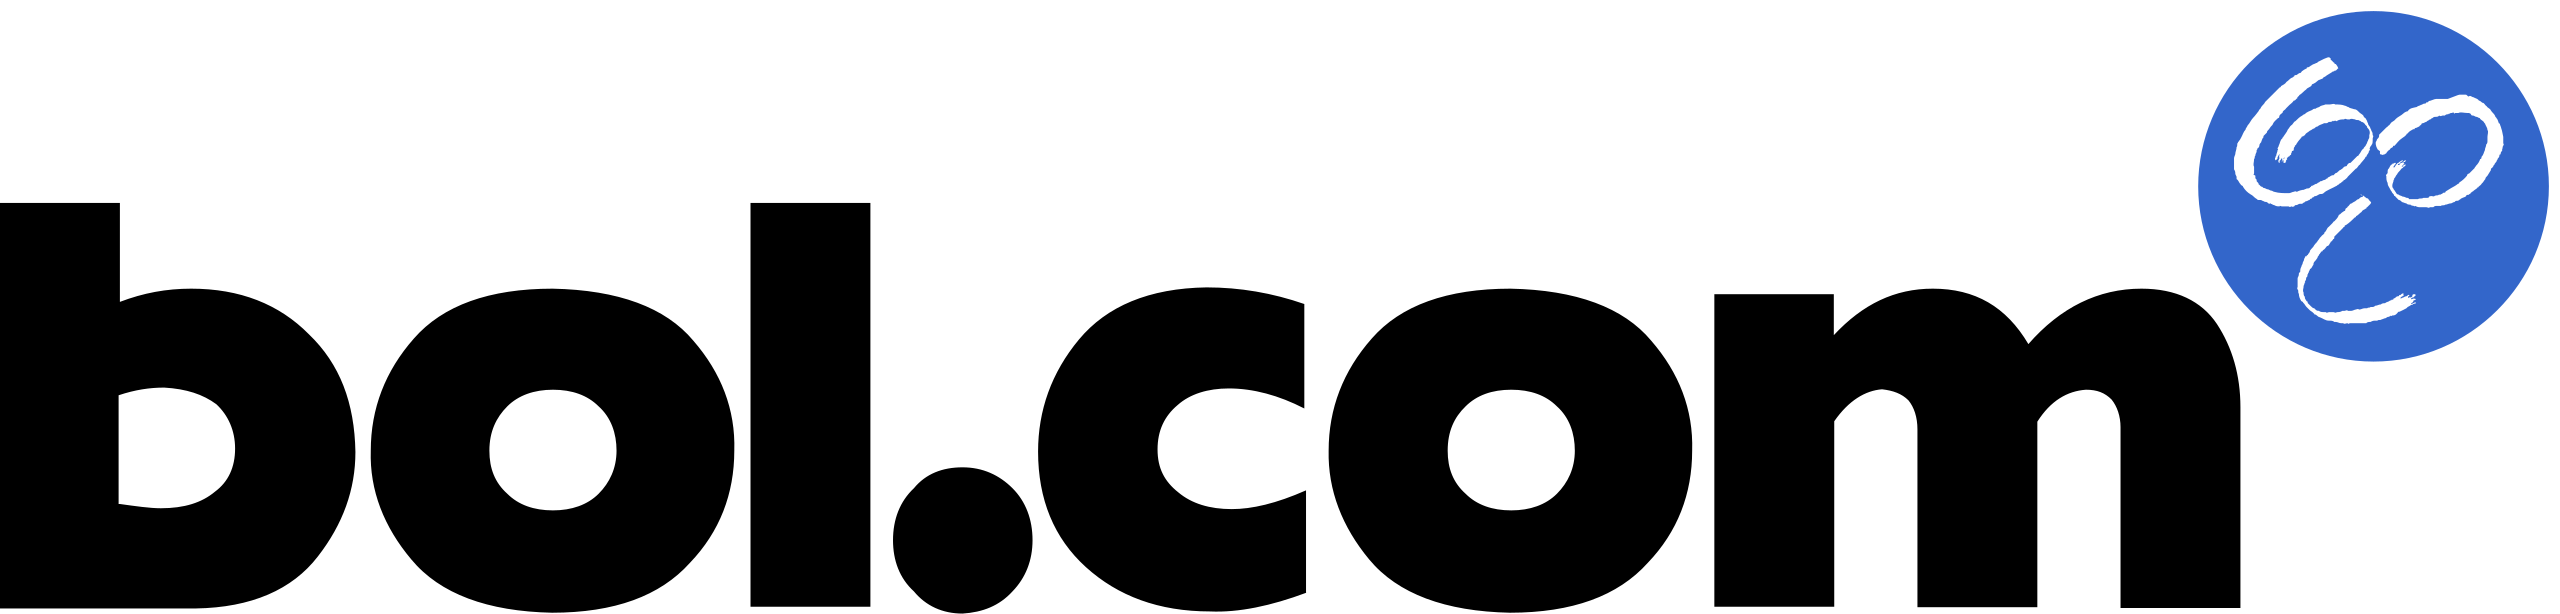 Bestand:Bol.com logo.svg - Wikipedia